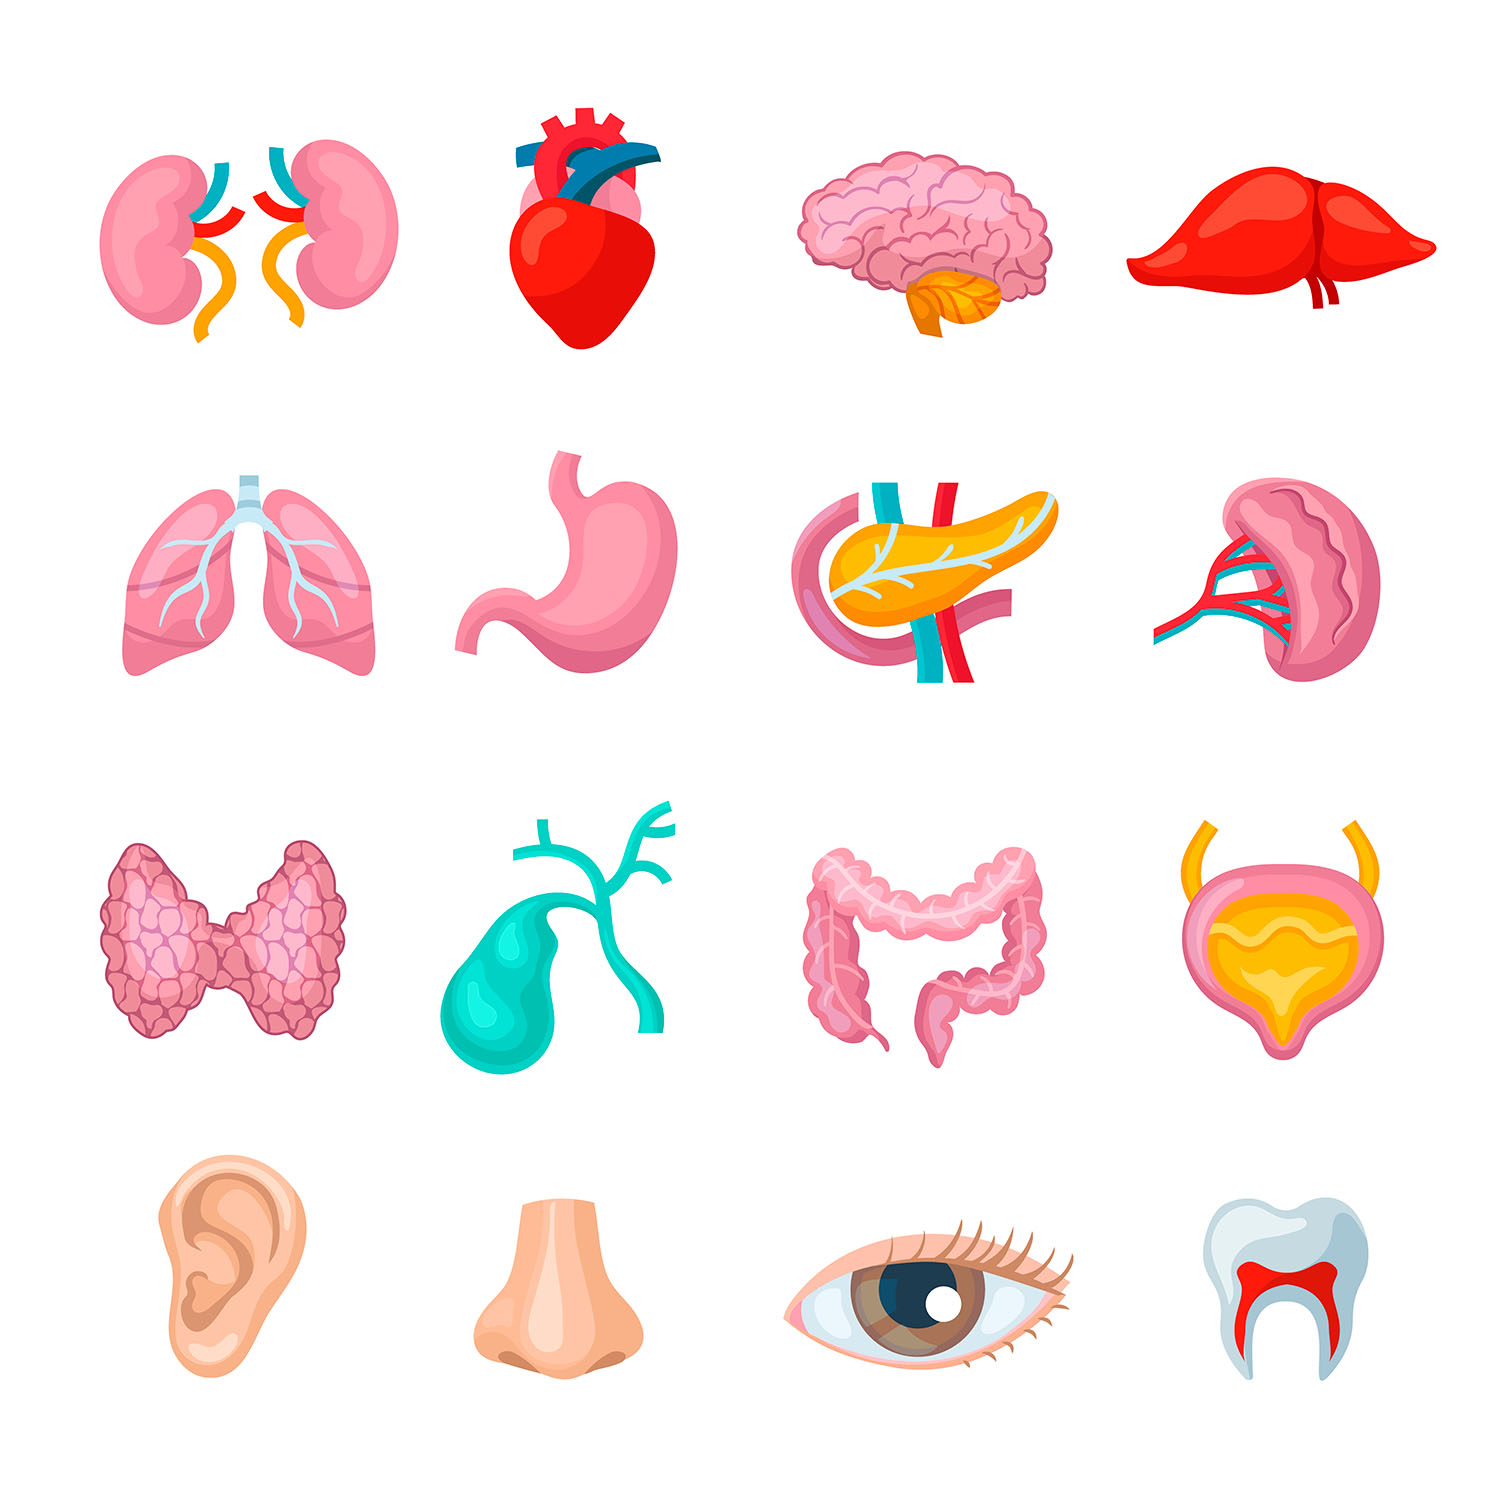 Vector illustrations of human body organs from Freepik